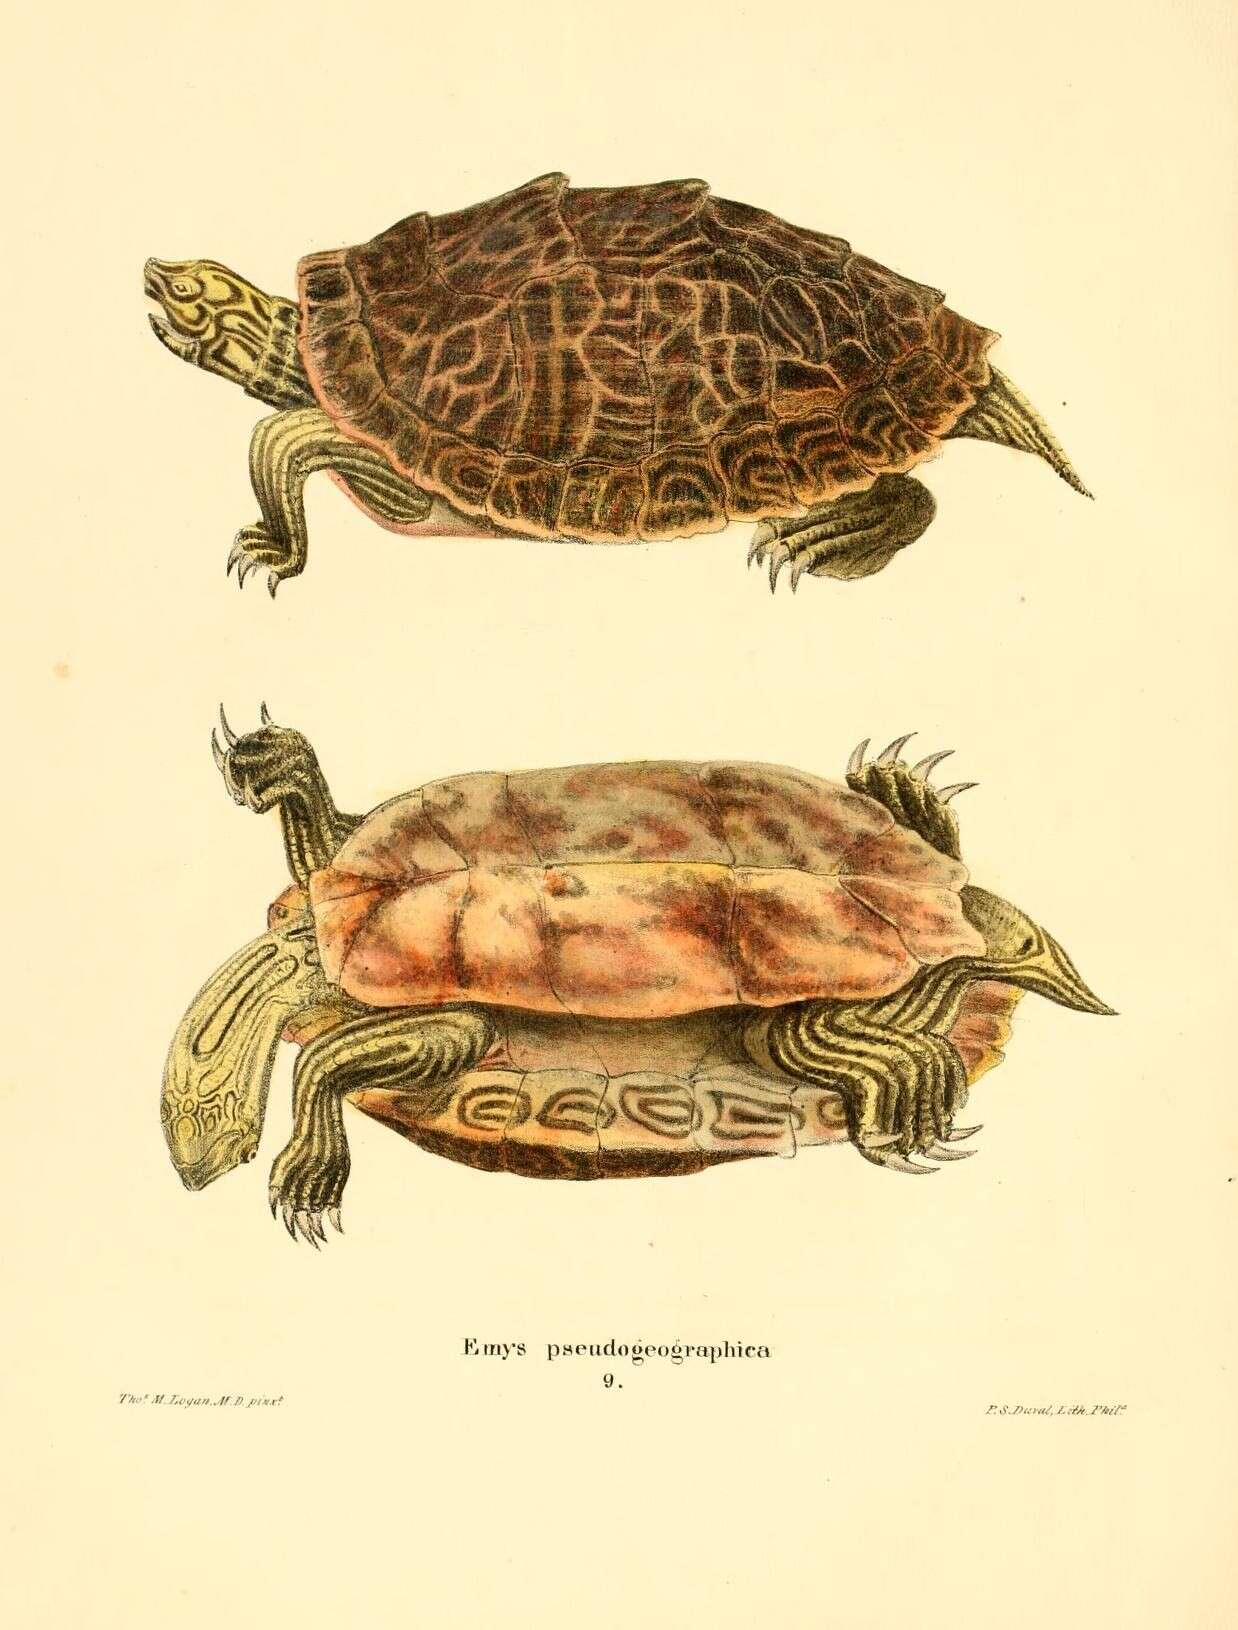 Image of Map Turtles